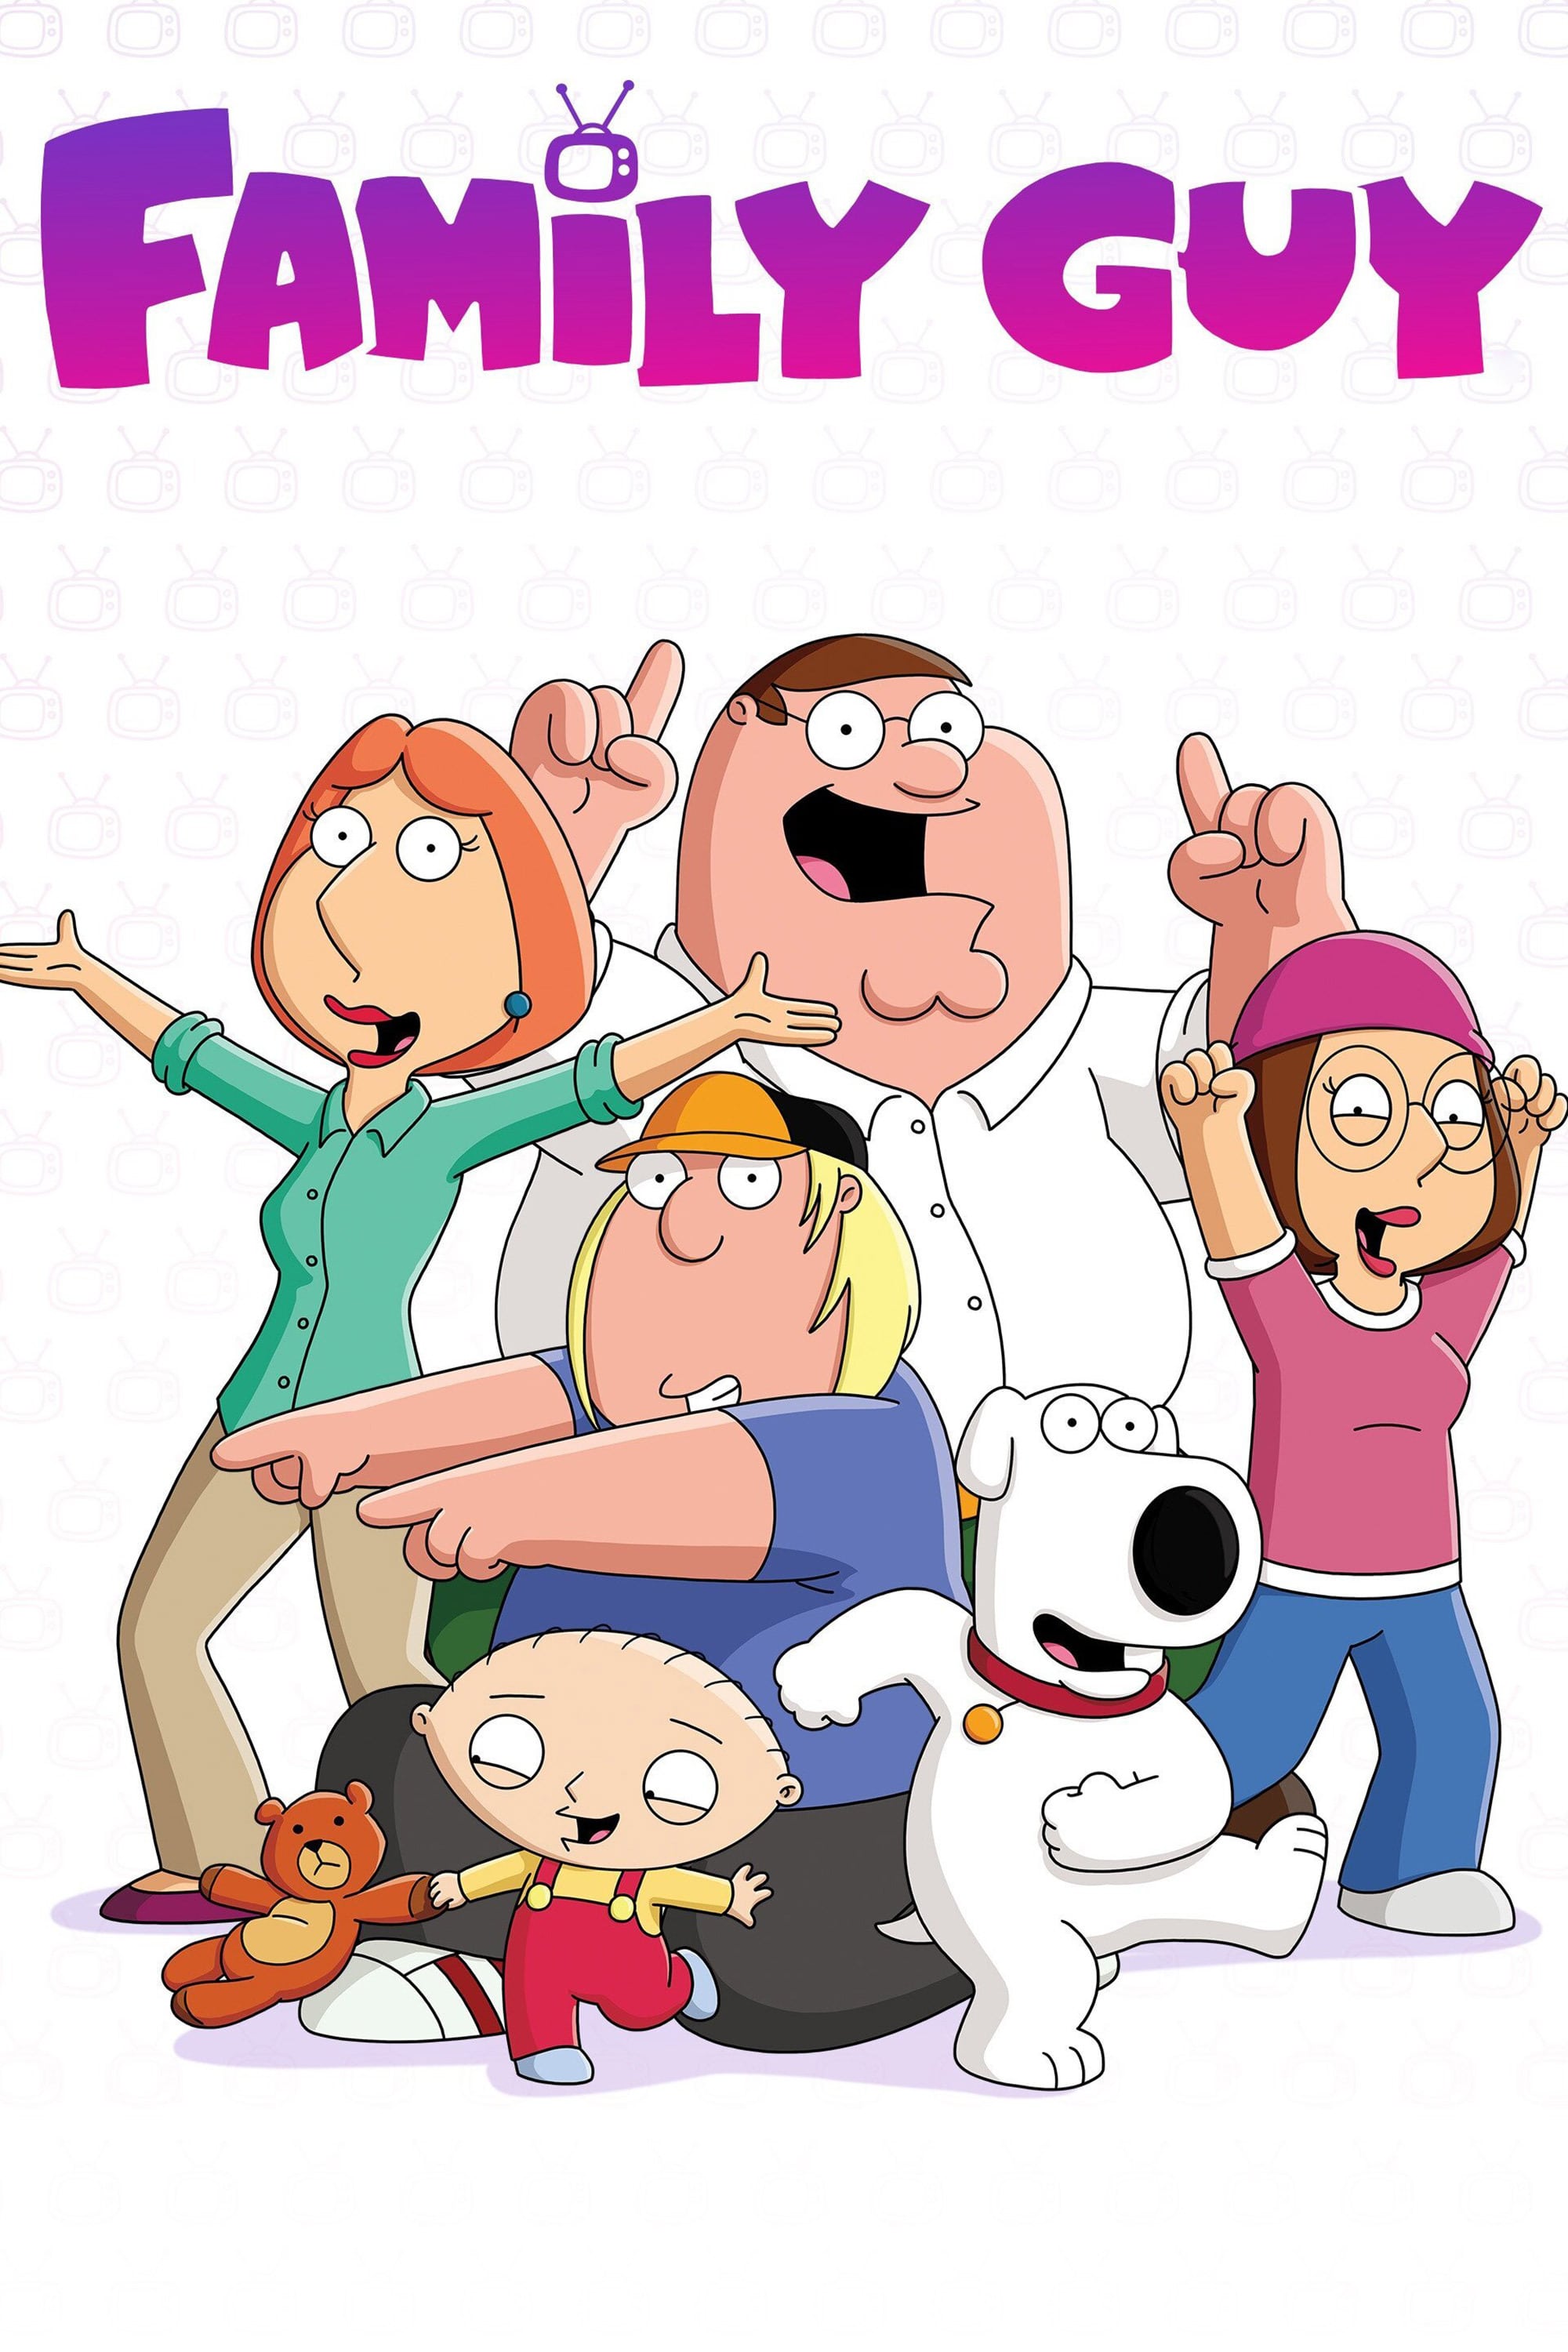 Caratula de Family Guy (Padre de familia) 